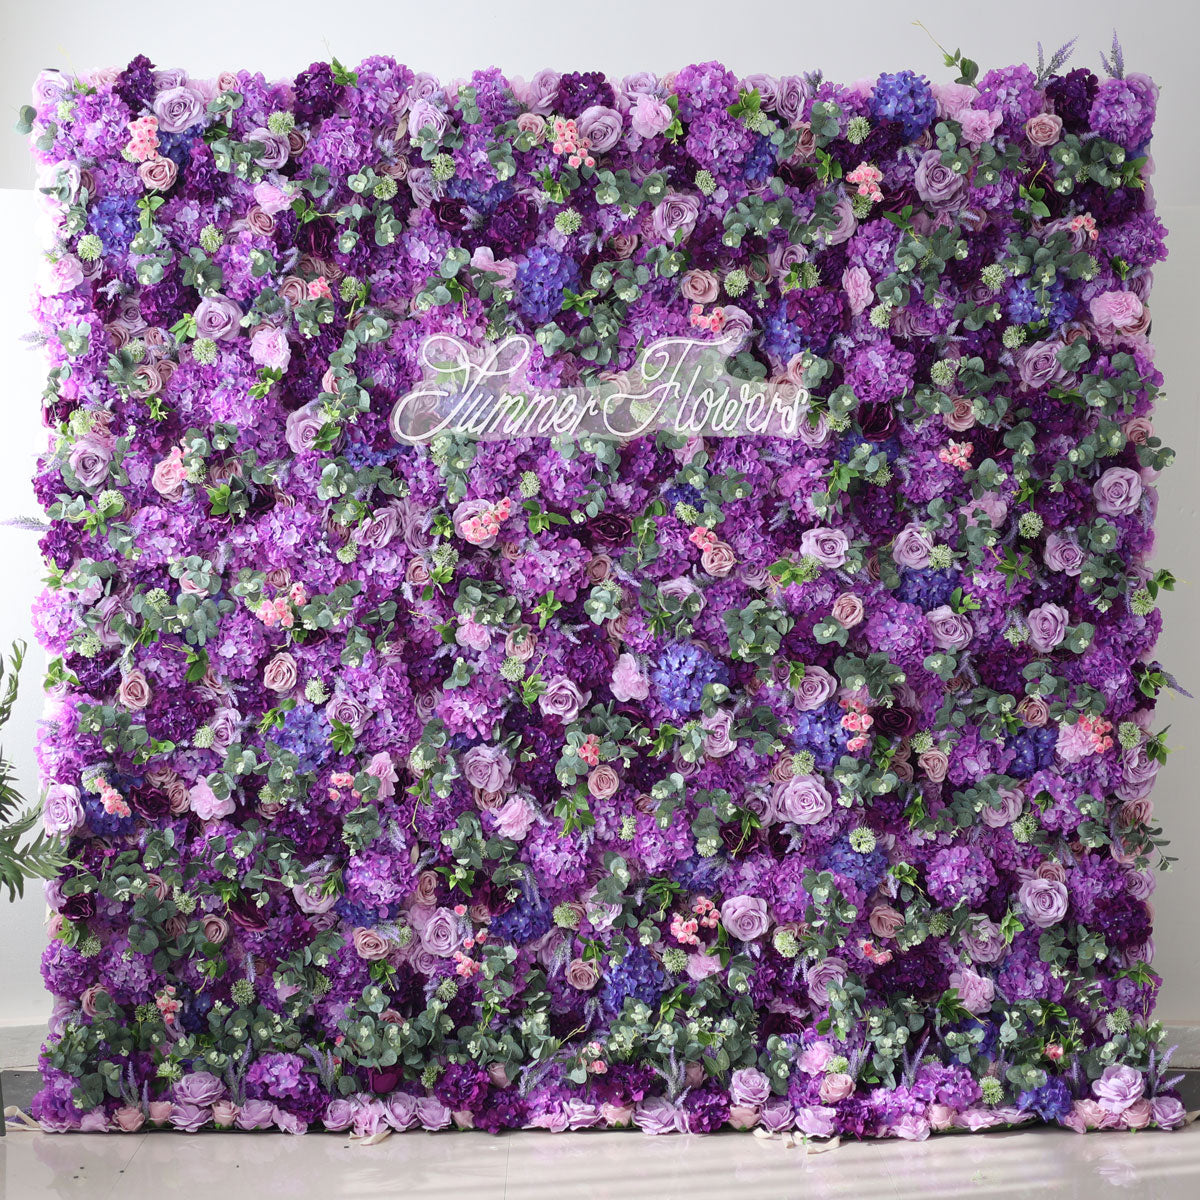 Summer Flower:CB-192 8ft*8ft Cloth Back Artificial Flower Wall Backdrop